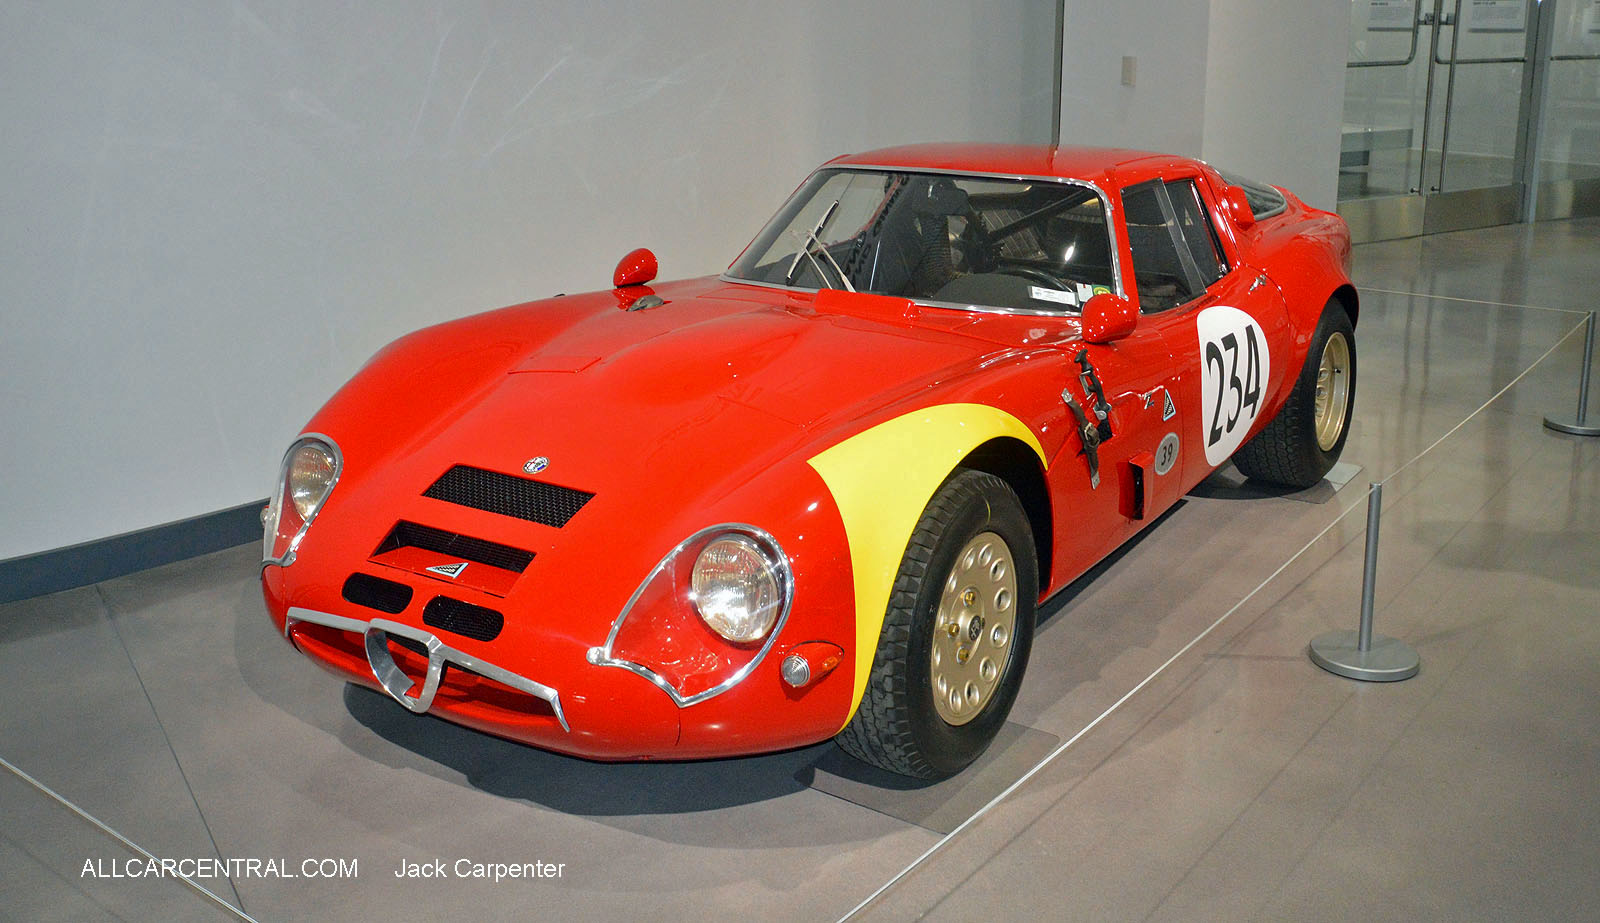   
Alfa Romeo TZ2 Zagato  Petersen Automotive Museum 
2016